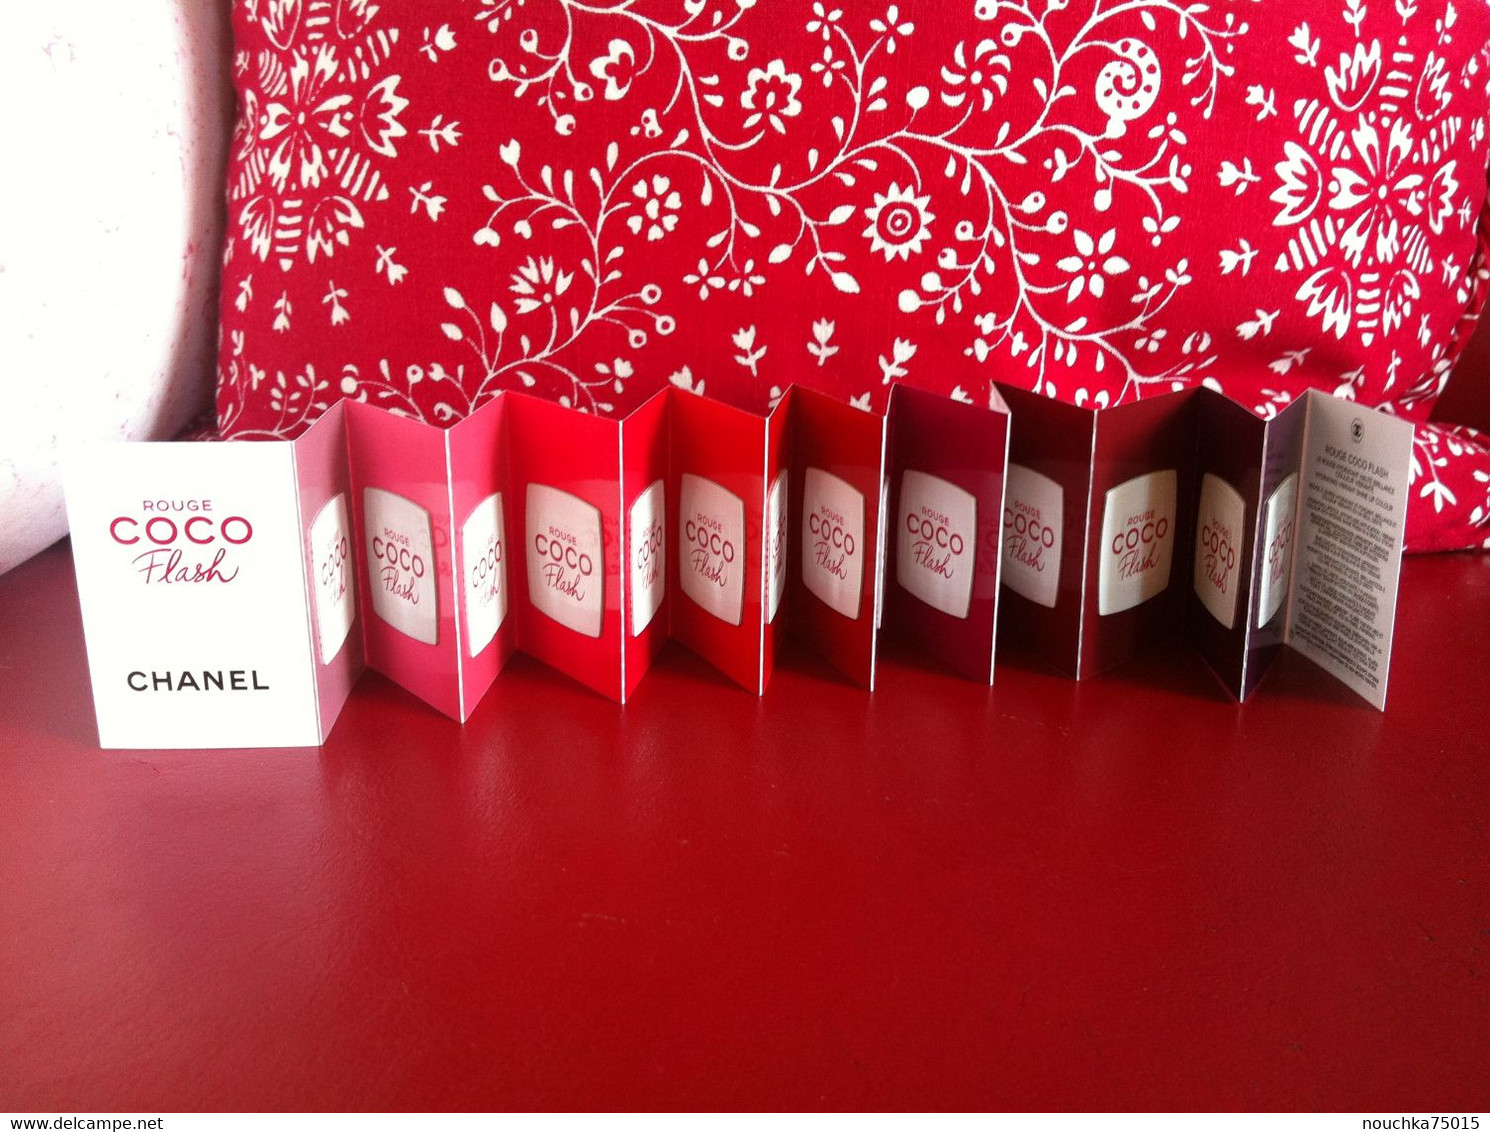 Chanel - Rouge Coco Flash, échantillons RAL - Campioncini Di Profumo (testers)